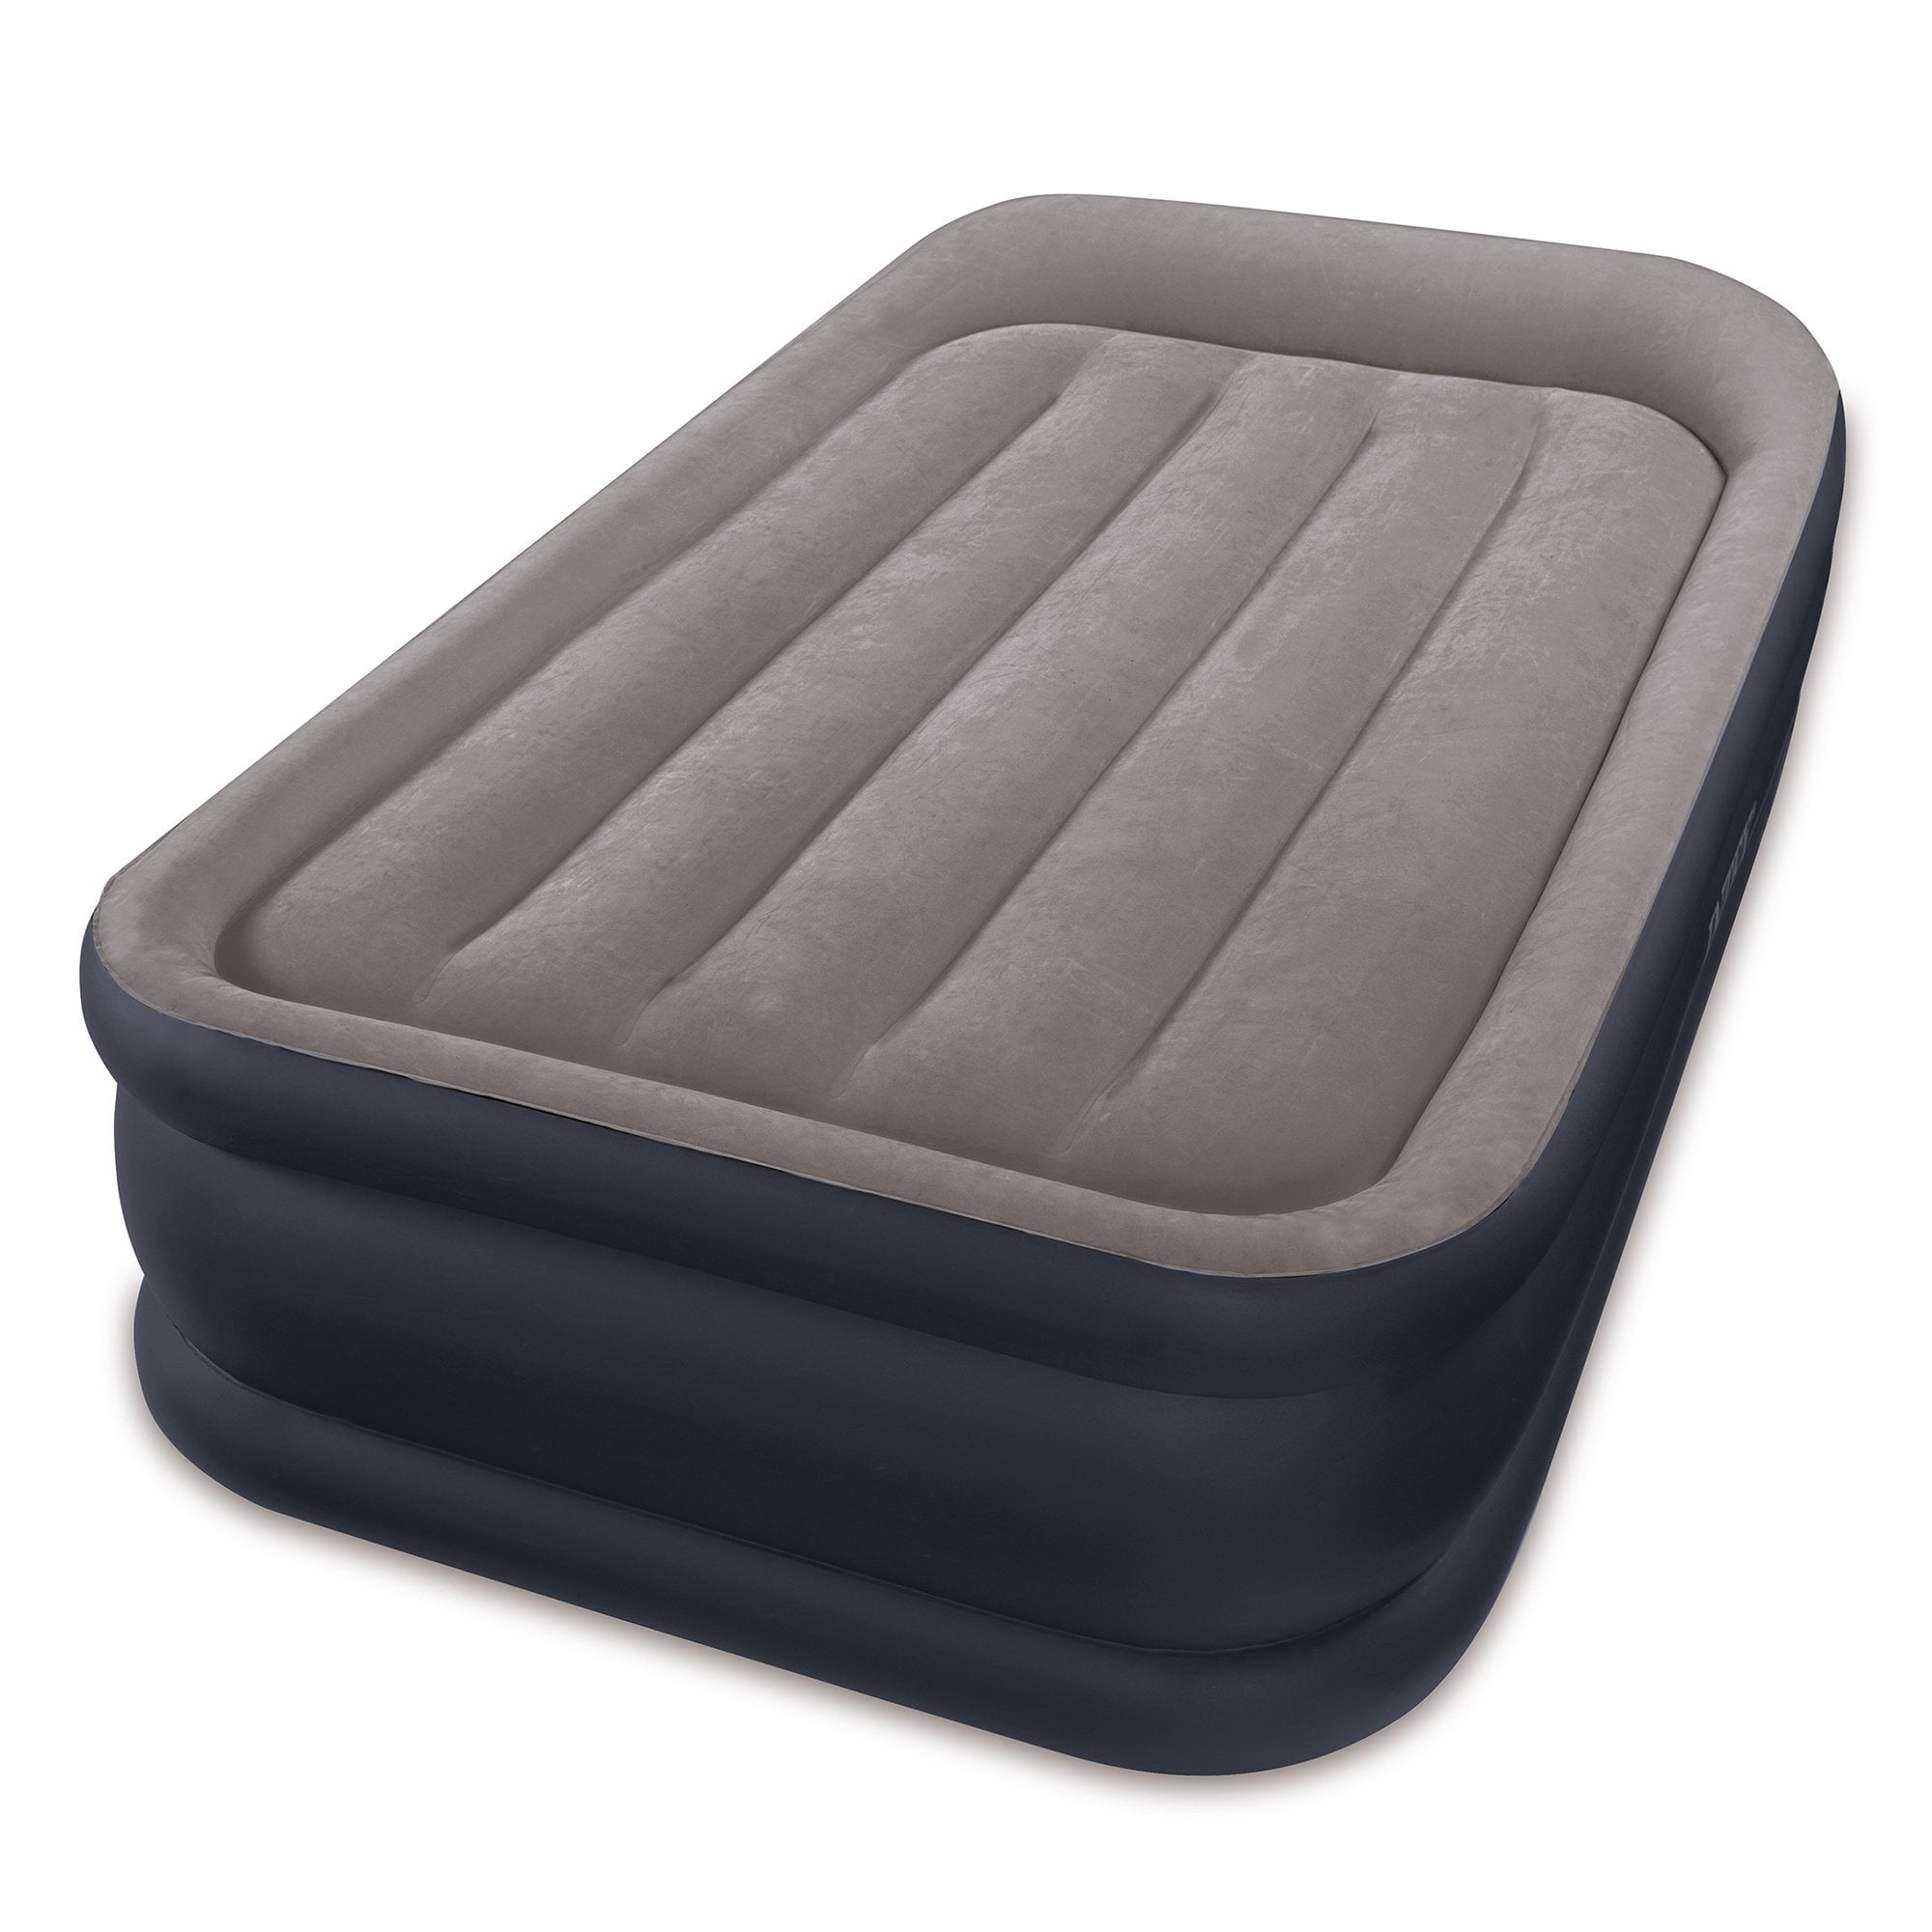 Open Box 4 Pack Twin Intex Comfort Plush Elevated Dura-Beam Airbed w/ Pump 